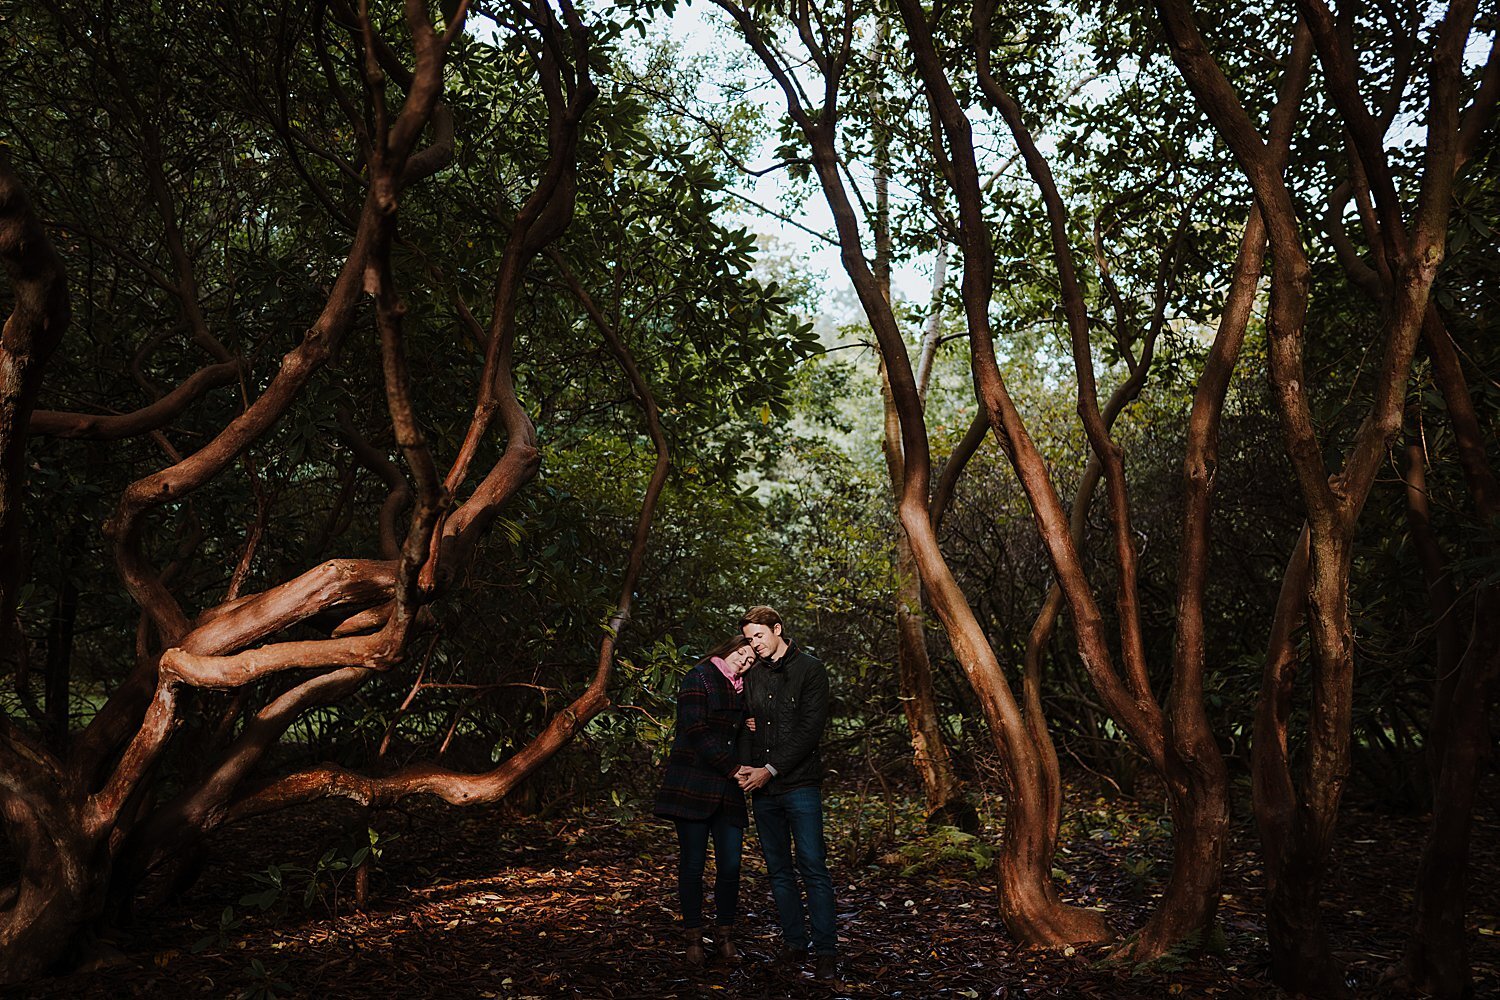 Sheffield Park wedding photographer in Sussex. An Autumnal engagement shoot.